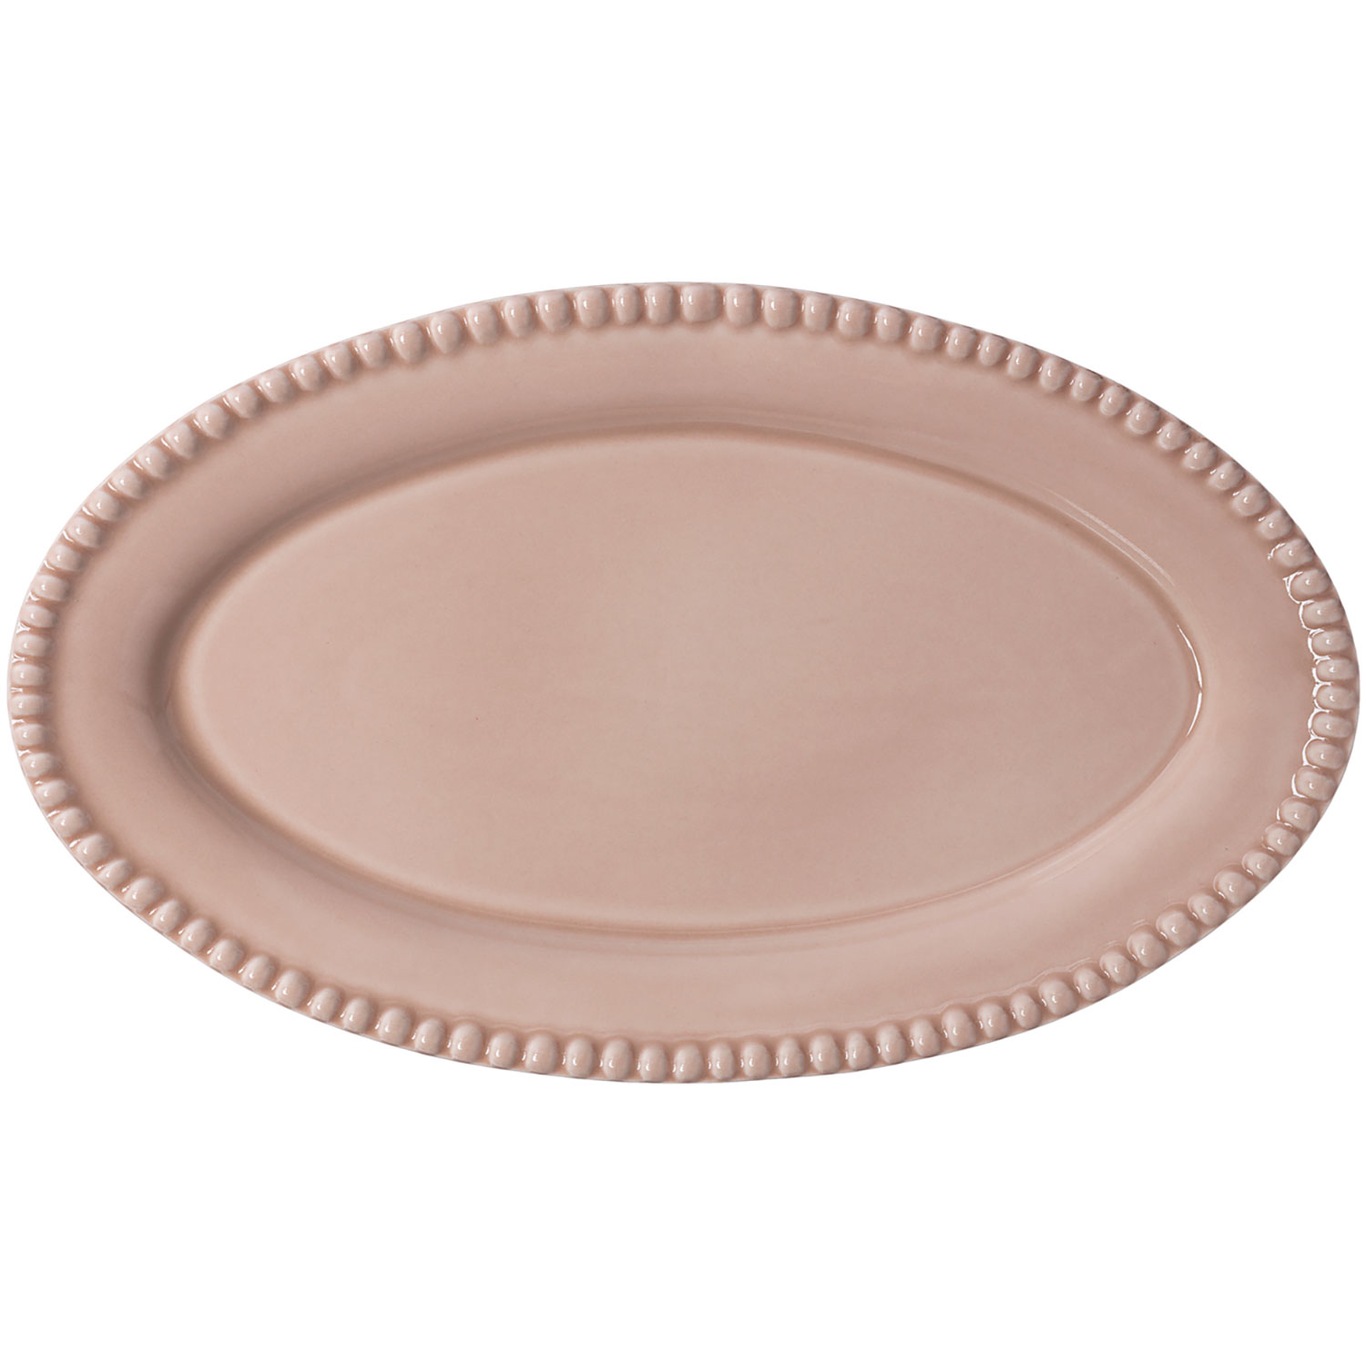 DARIA Platter Oval 35 cm, Accolade